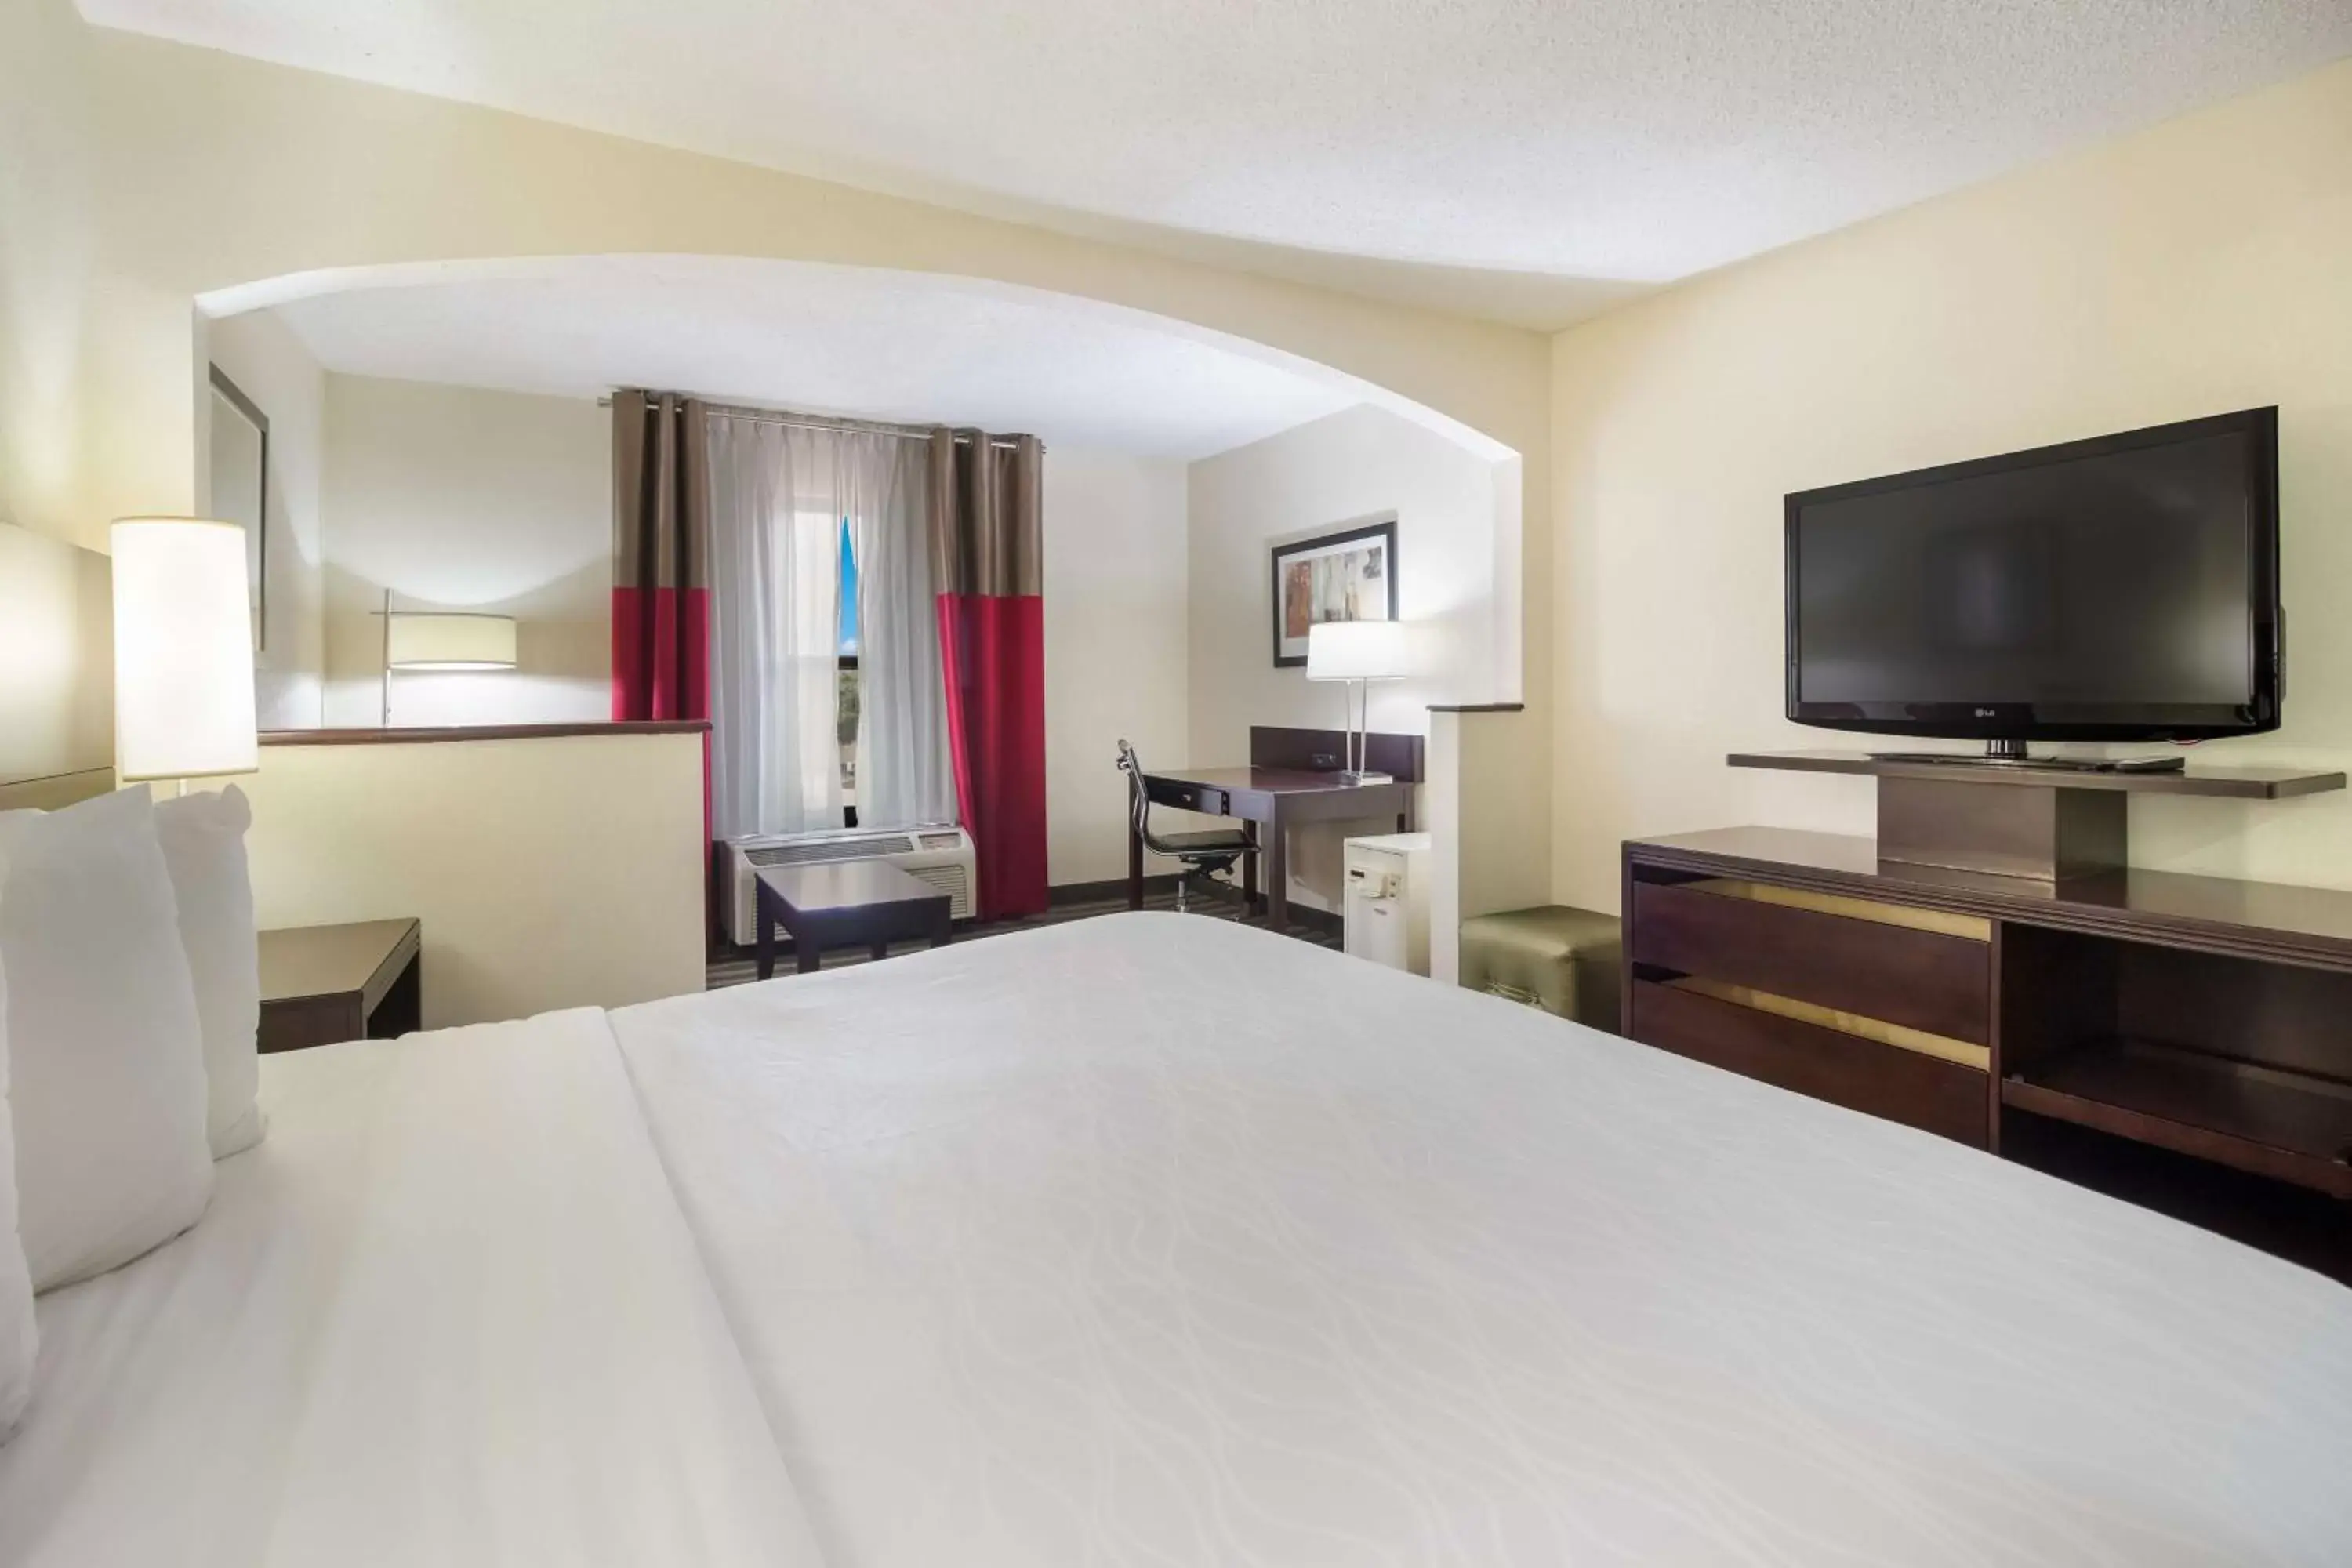 Bedroom, TV/Entertainment Center in Best Western Suites near Opryland